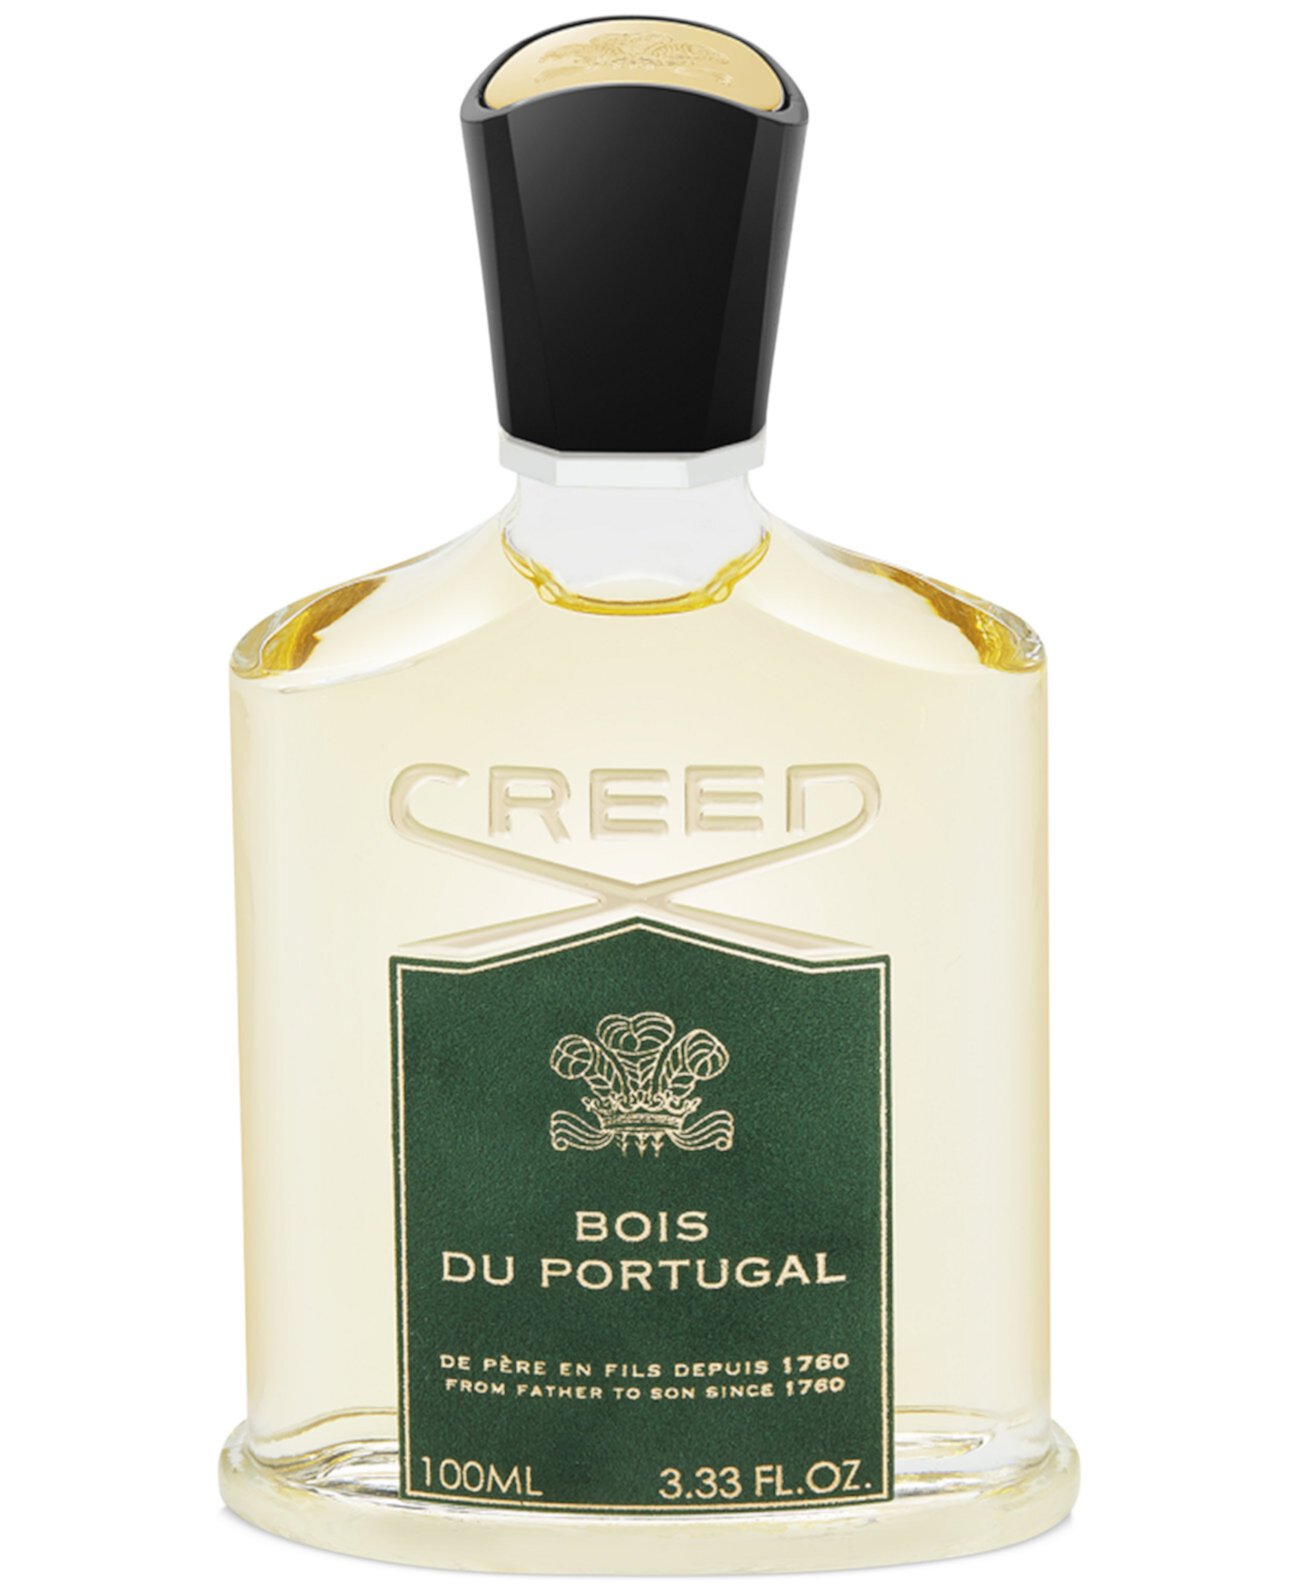 Bois du Portugal, 3.33 oz. Creed